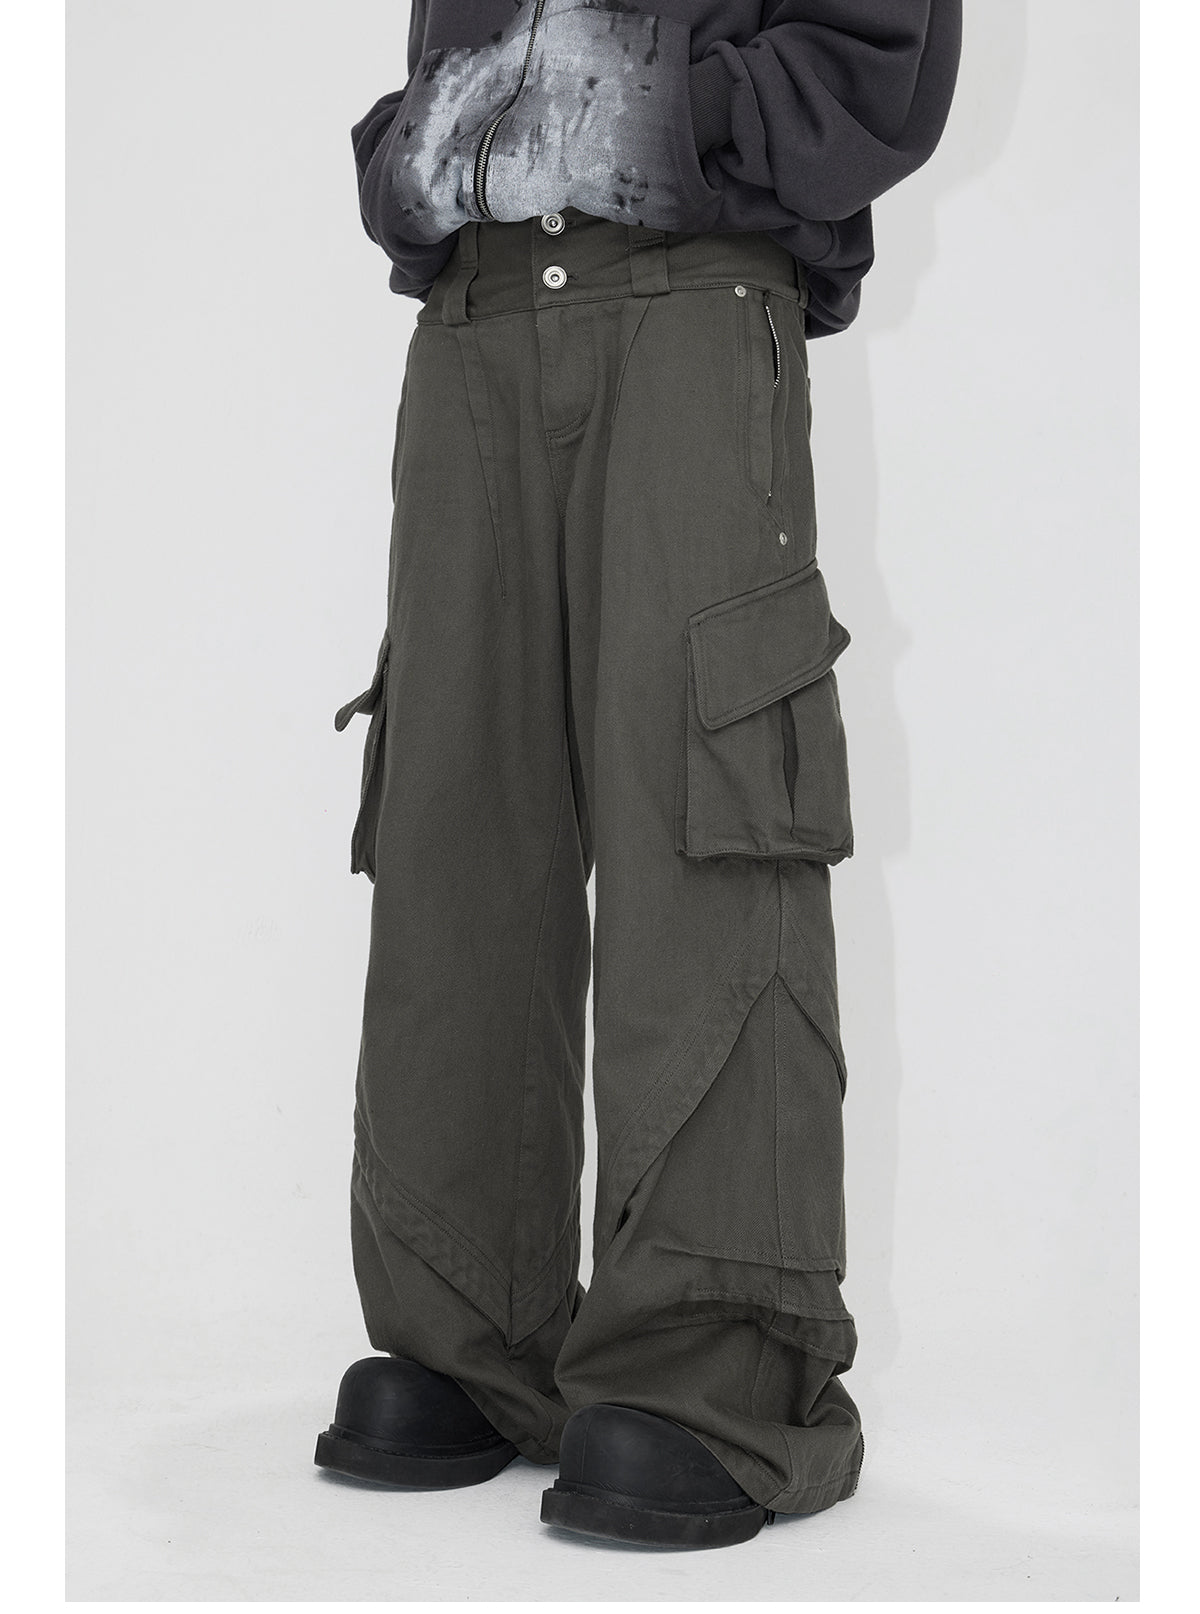 Multi-pocket double waist cargo pants